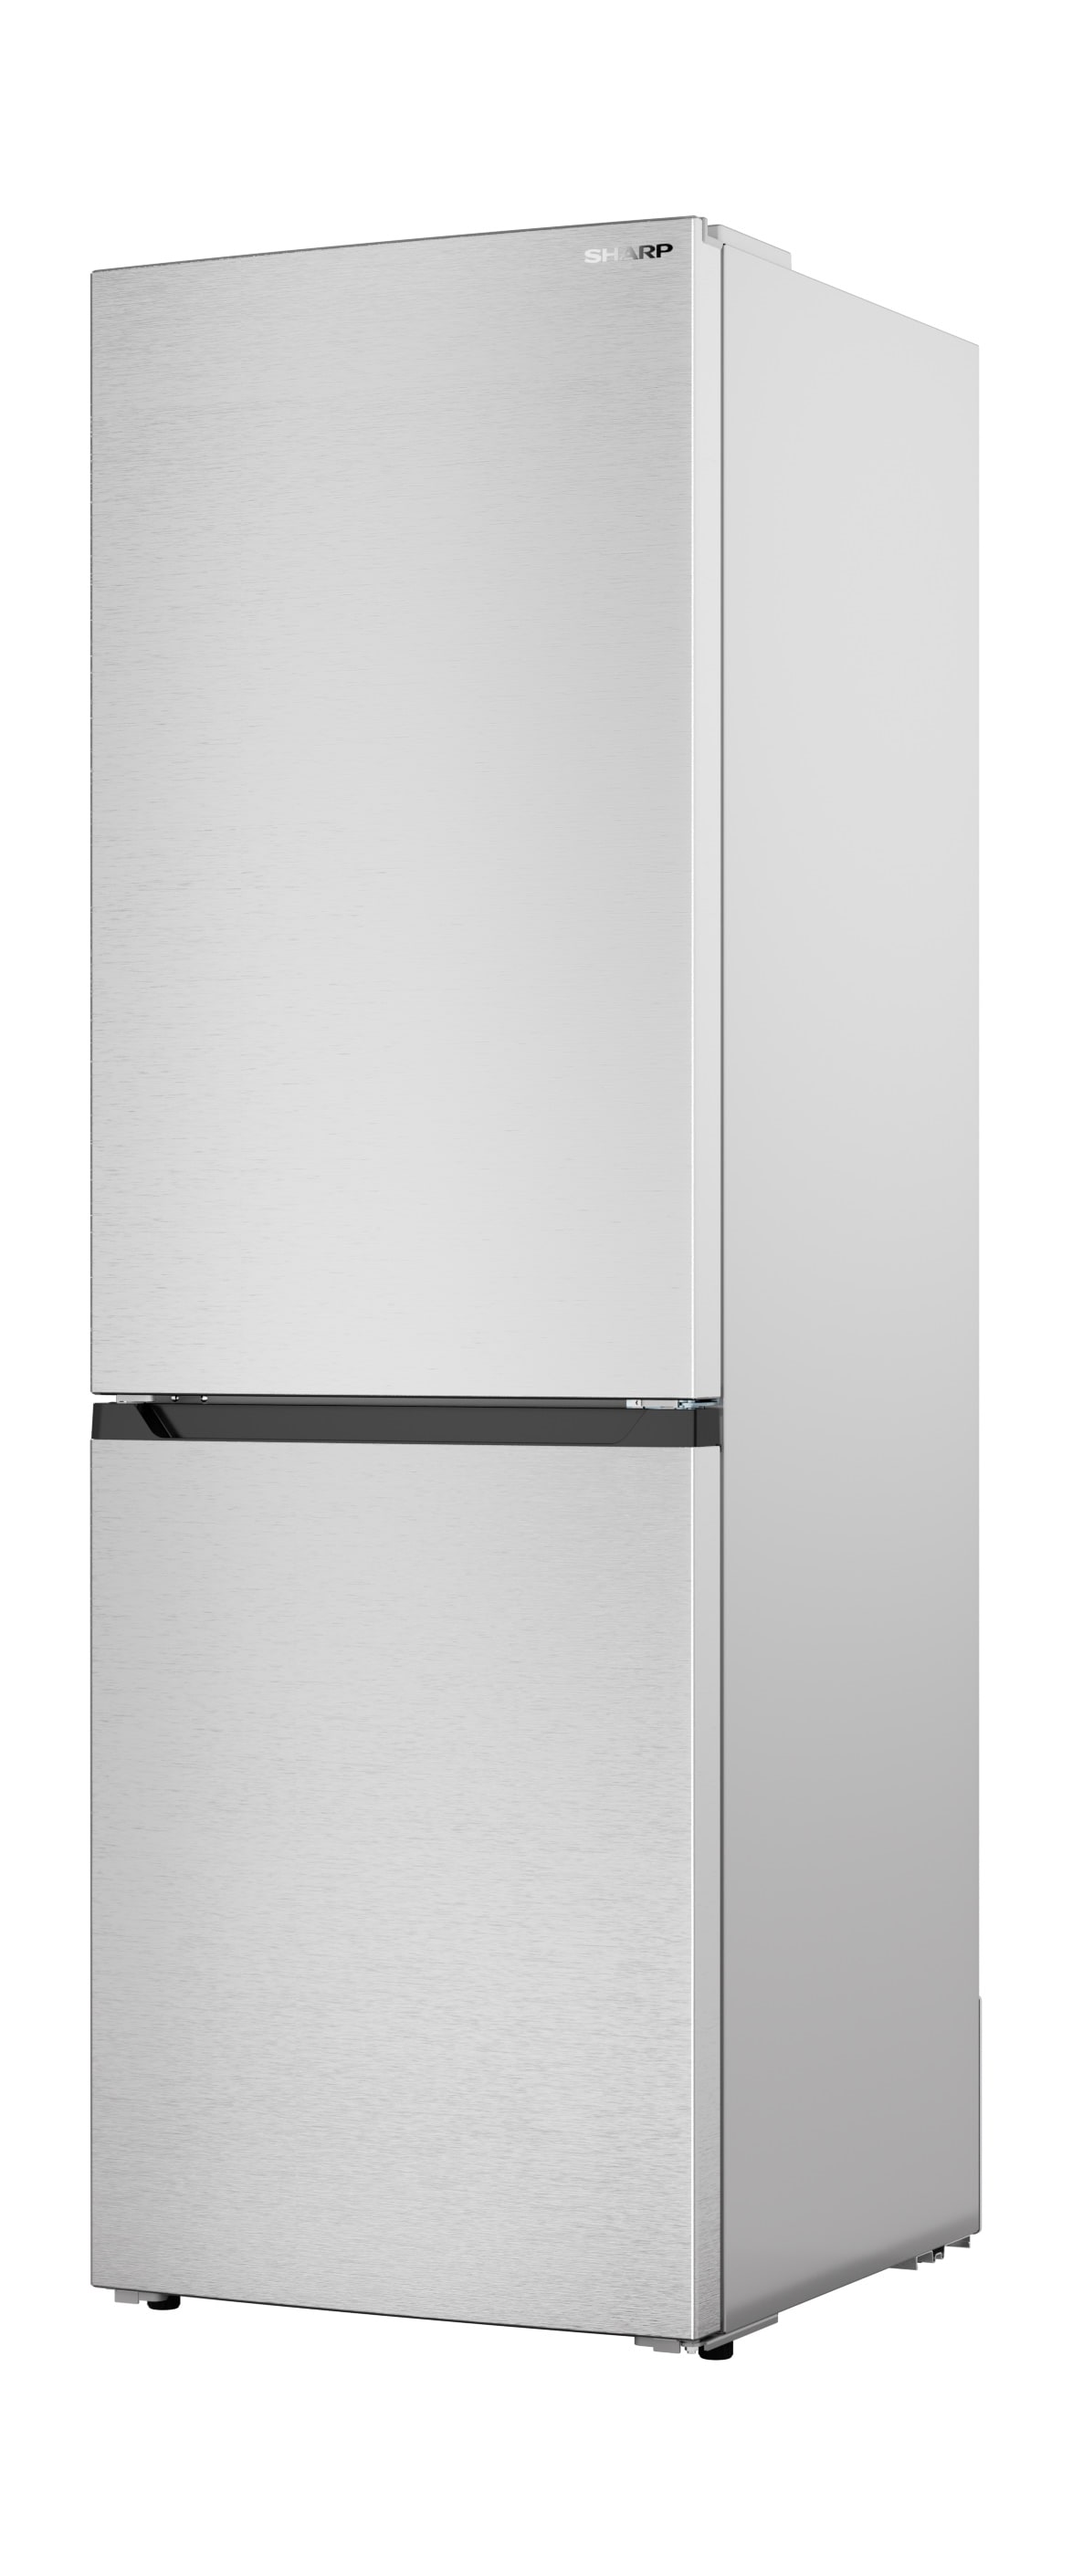 Sharp 11.5-cu ft Bottom-Freezer Refrigerator (Stainless at STAR department in Refrigerators Bottom-Freezer Steel) ENERGY the